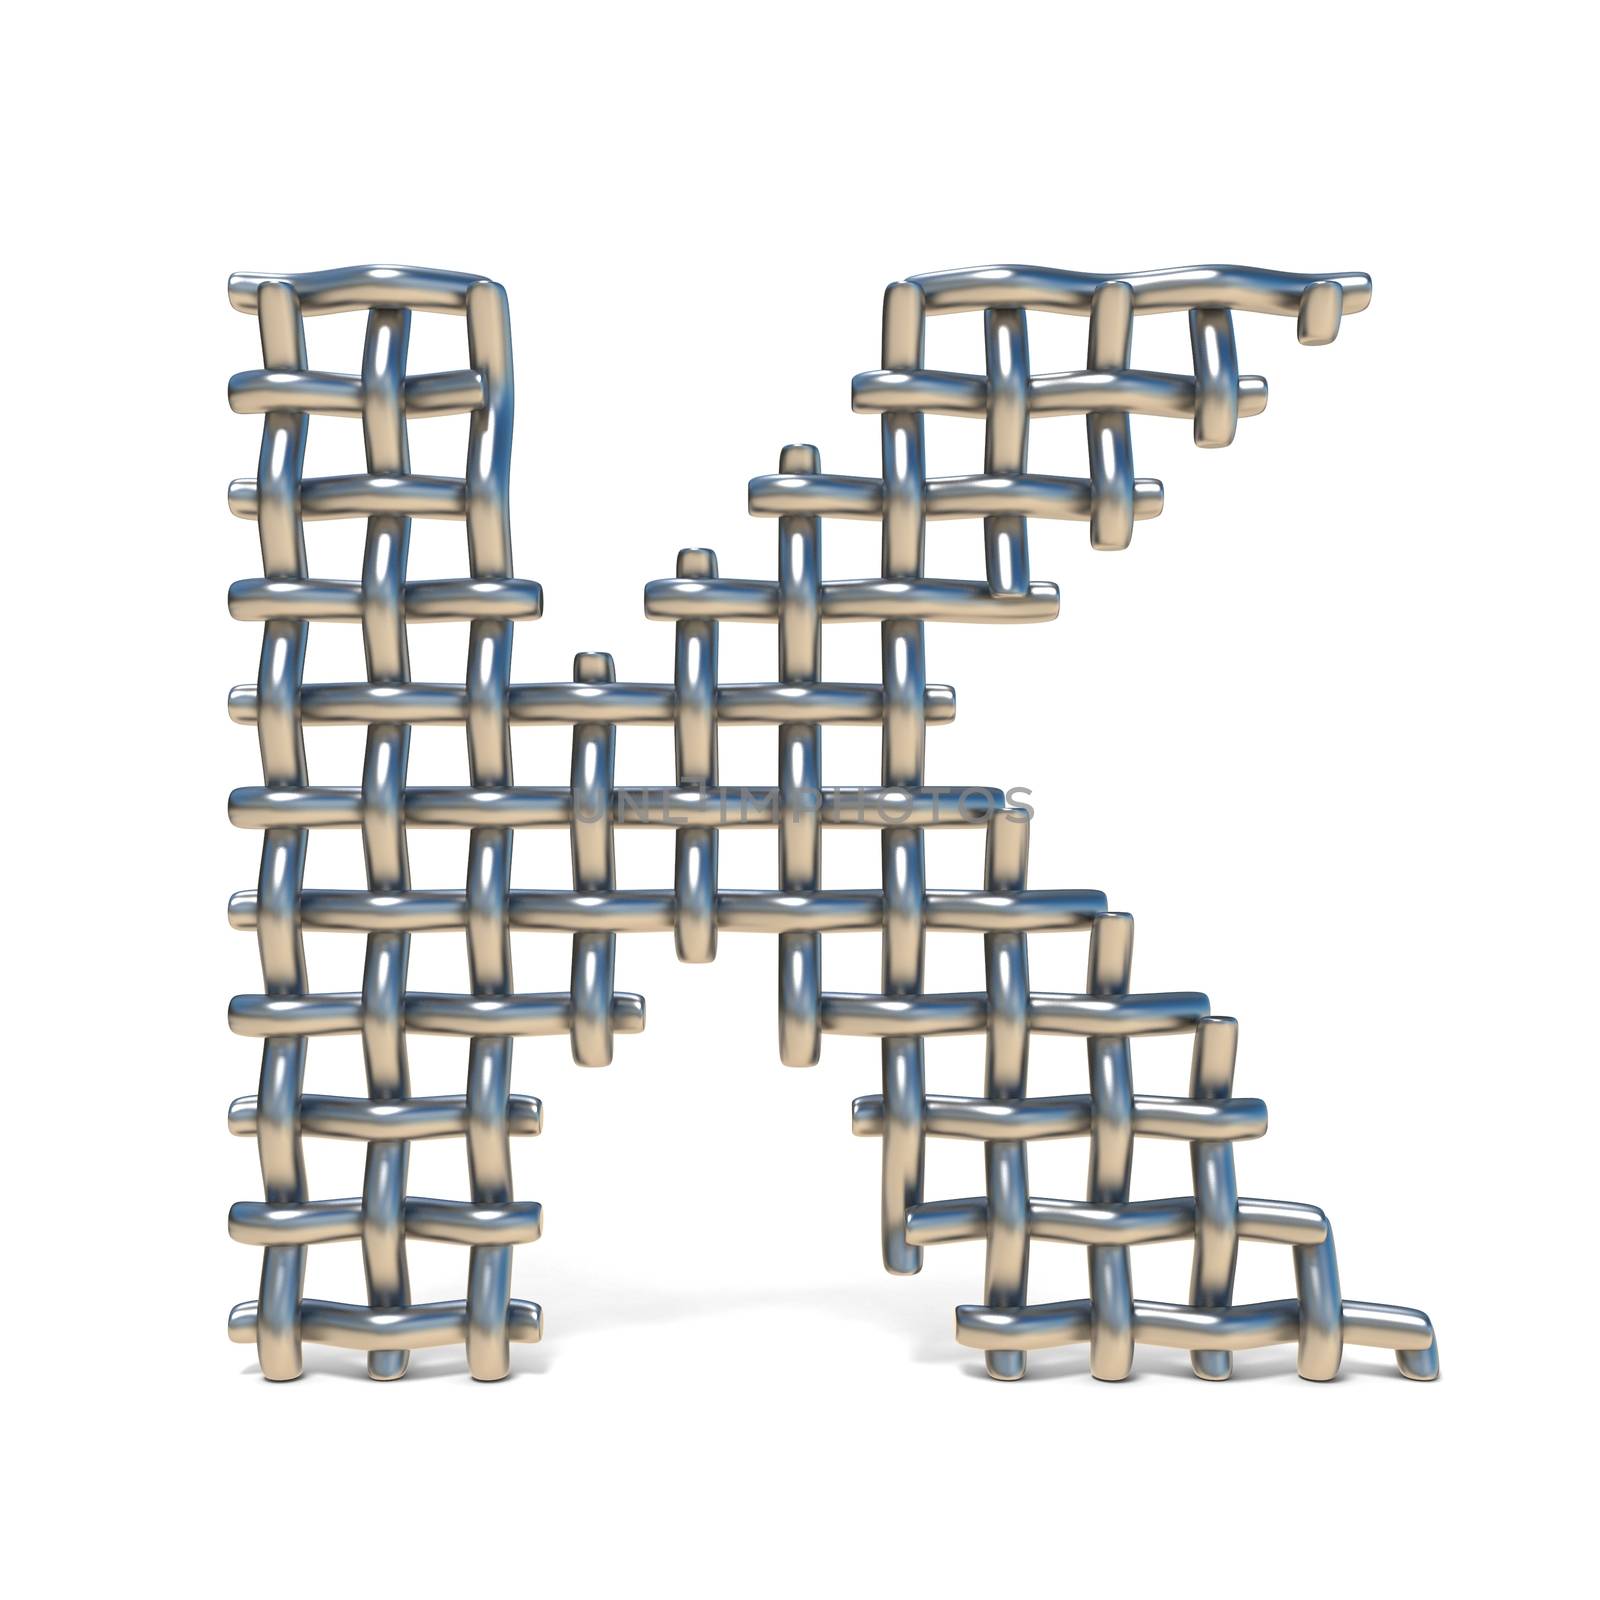 Metal wire mesh font LETTER K 3D render illustration isolated on white background